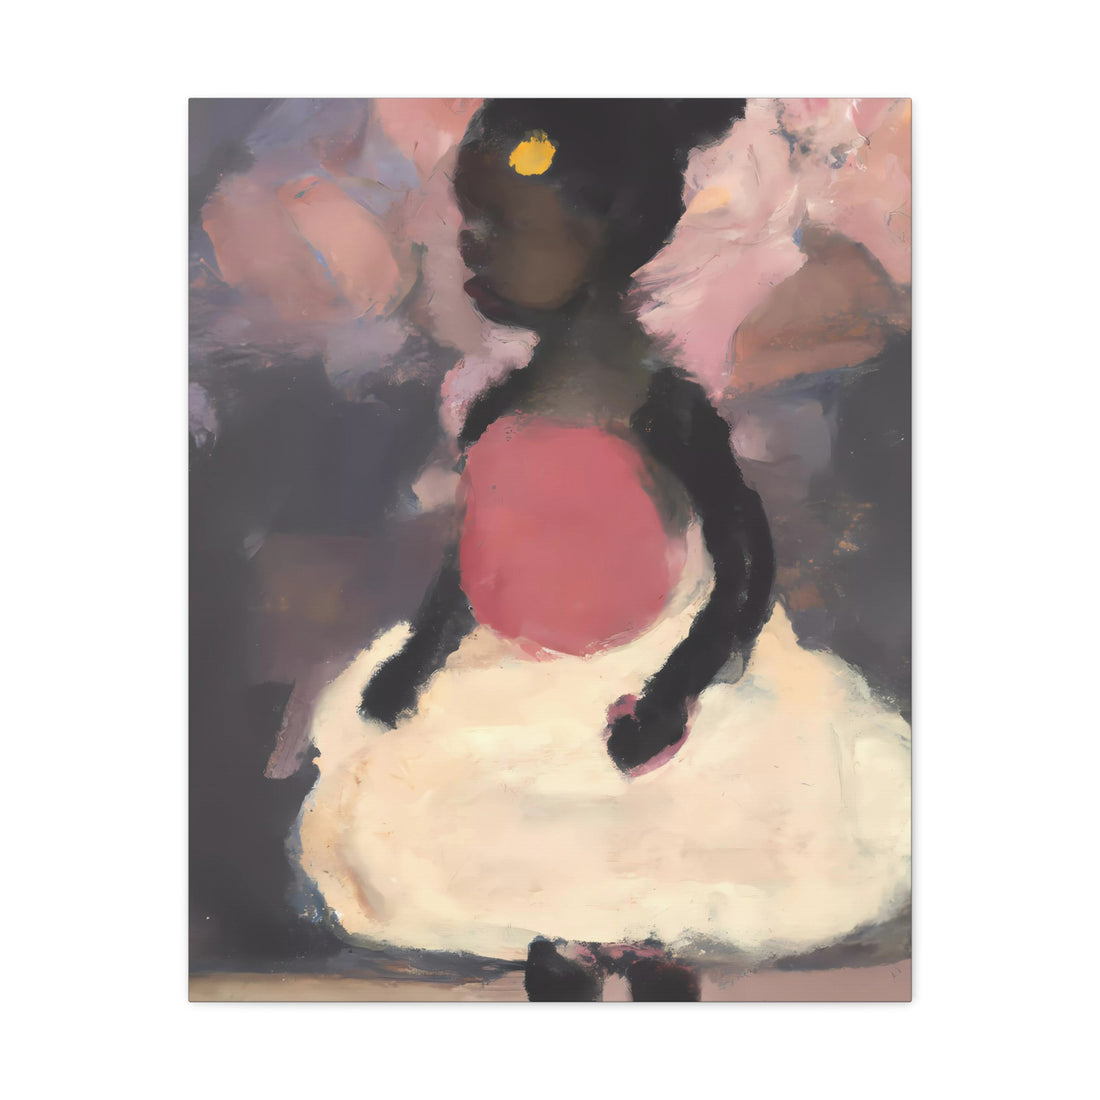 Black Ballerina 3 Canvas Wall Art Daughter Series